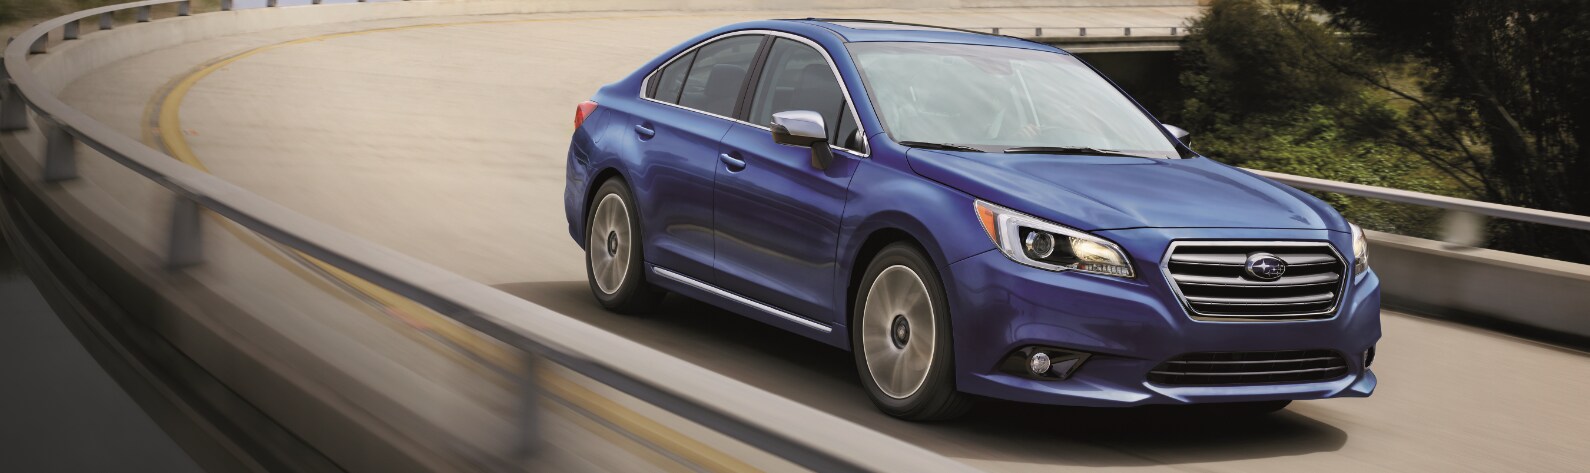 Subaru Legacy Lease Deals Near Kansas City Ks